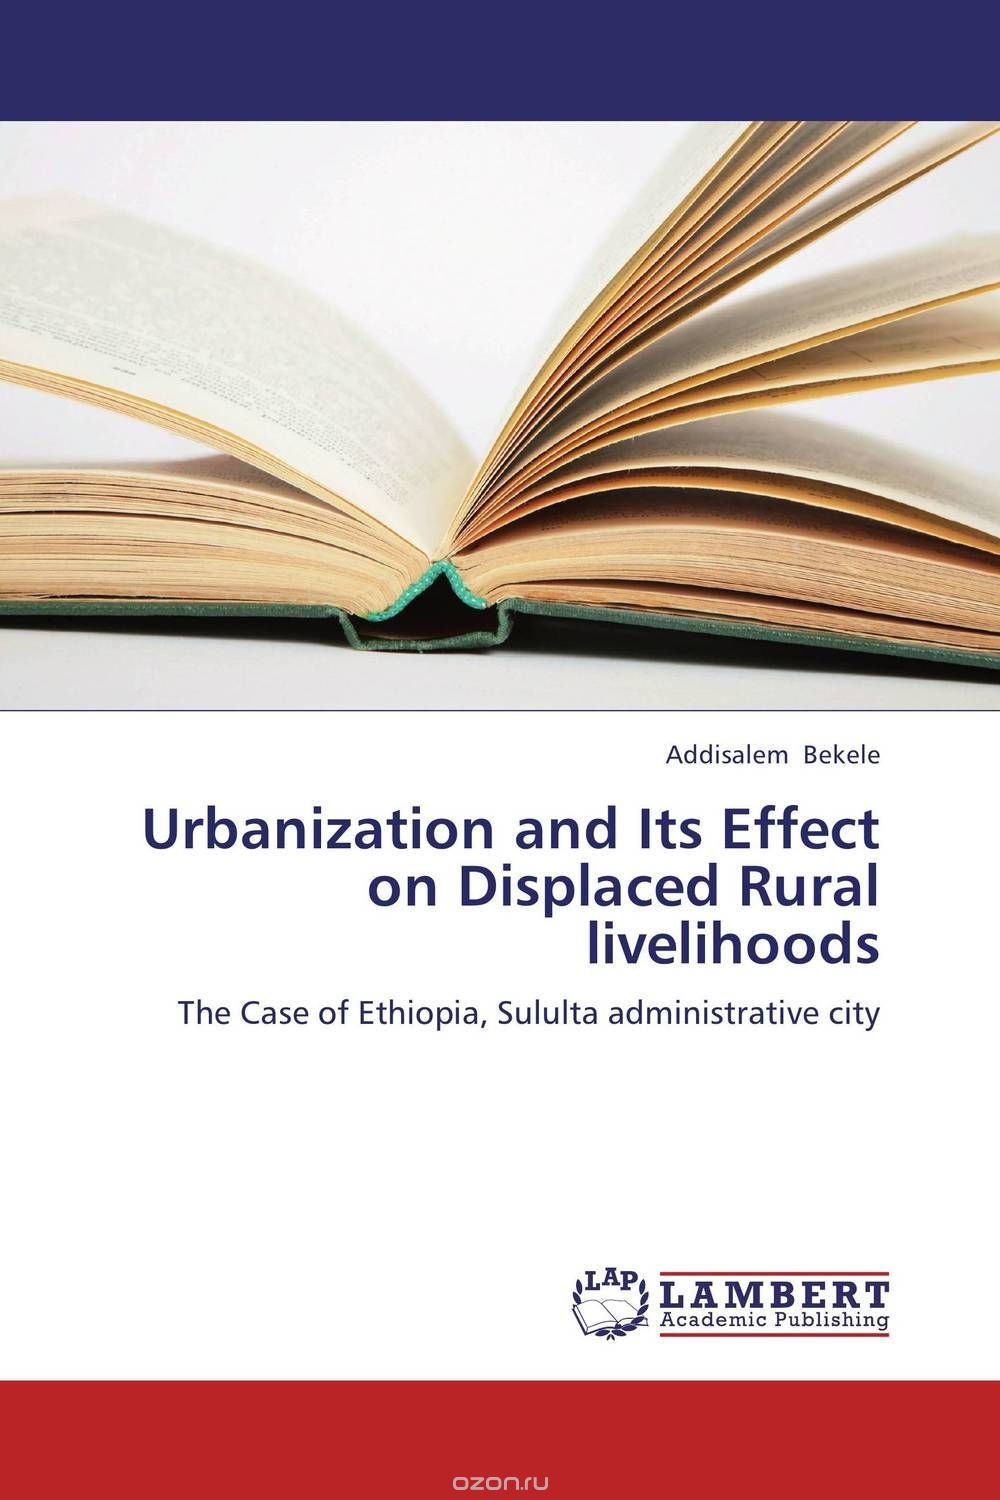 Скачать книгу "Urbanization and Its Effect on Displaced Rural livelihoods"